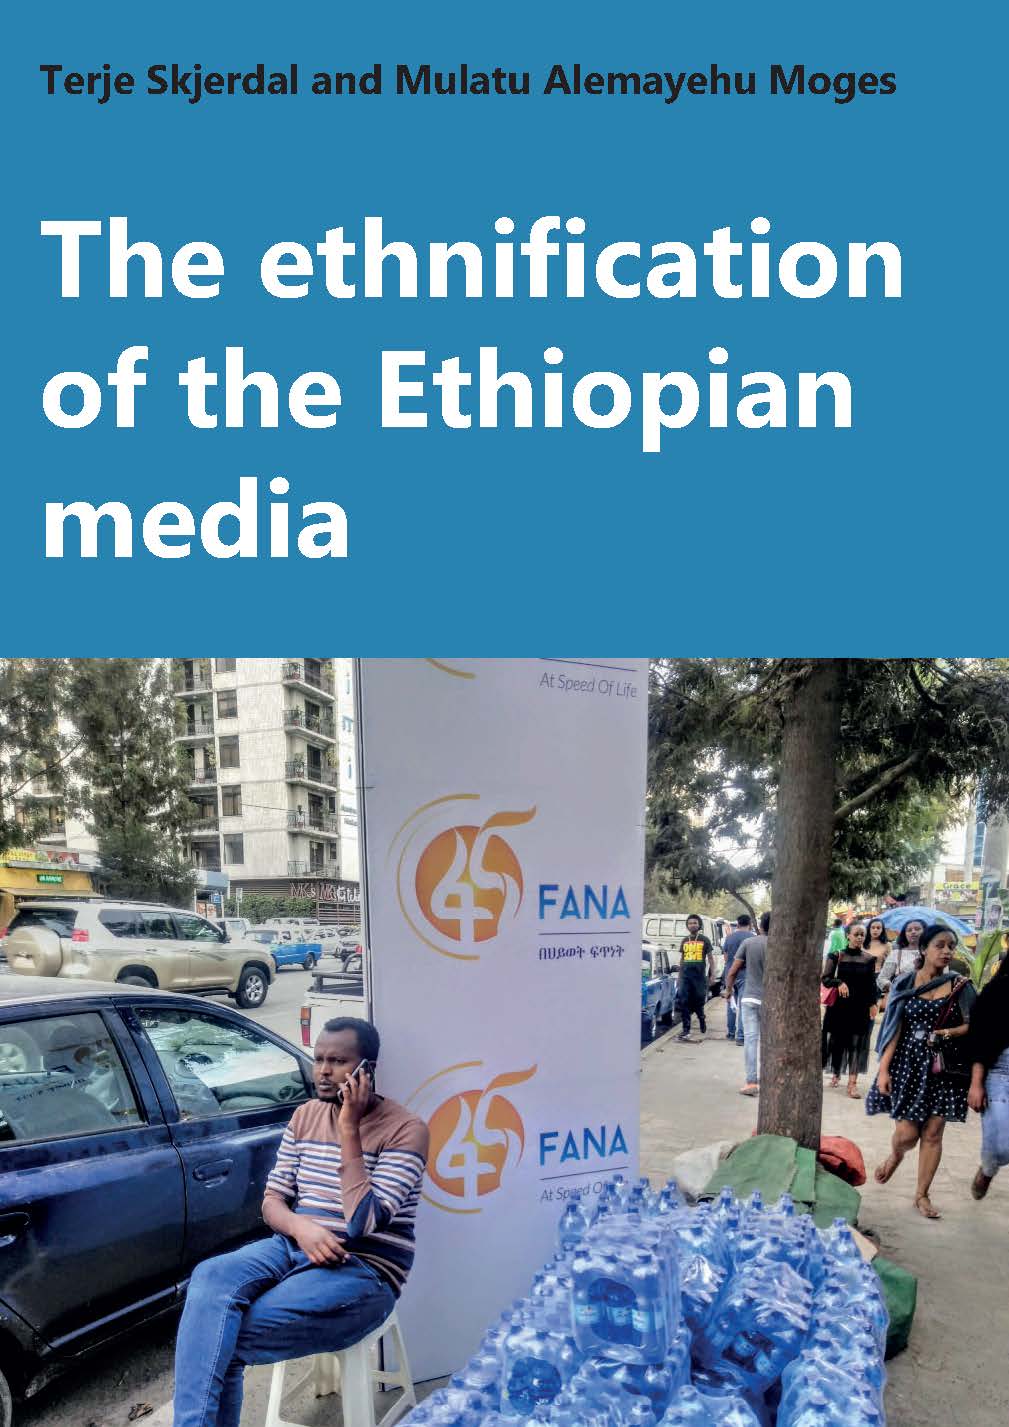 The ethnification of Ethiopian media